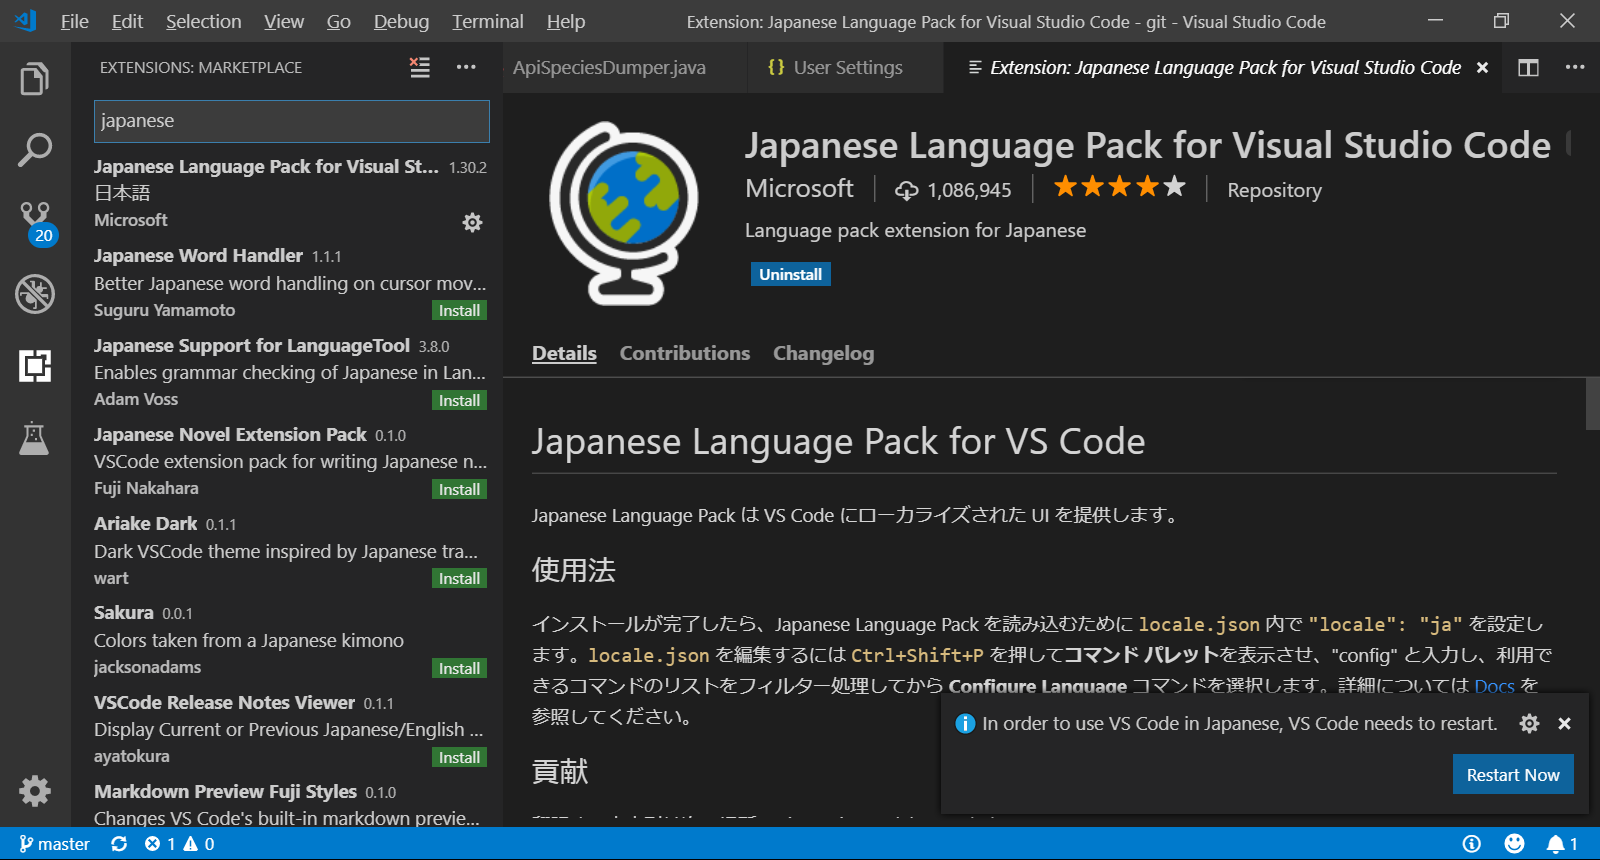 SnapCrab_Extension Japanese Language Pack for Visual Studio Code - git - Visual Studio Code_2019-1-19_23-0-11_No-00.png